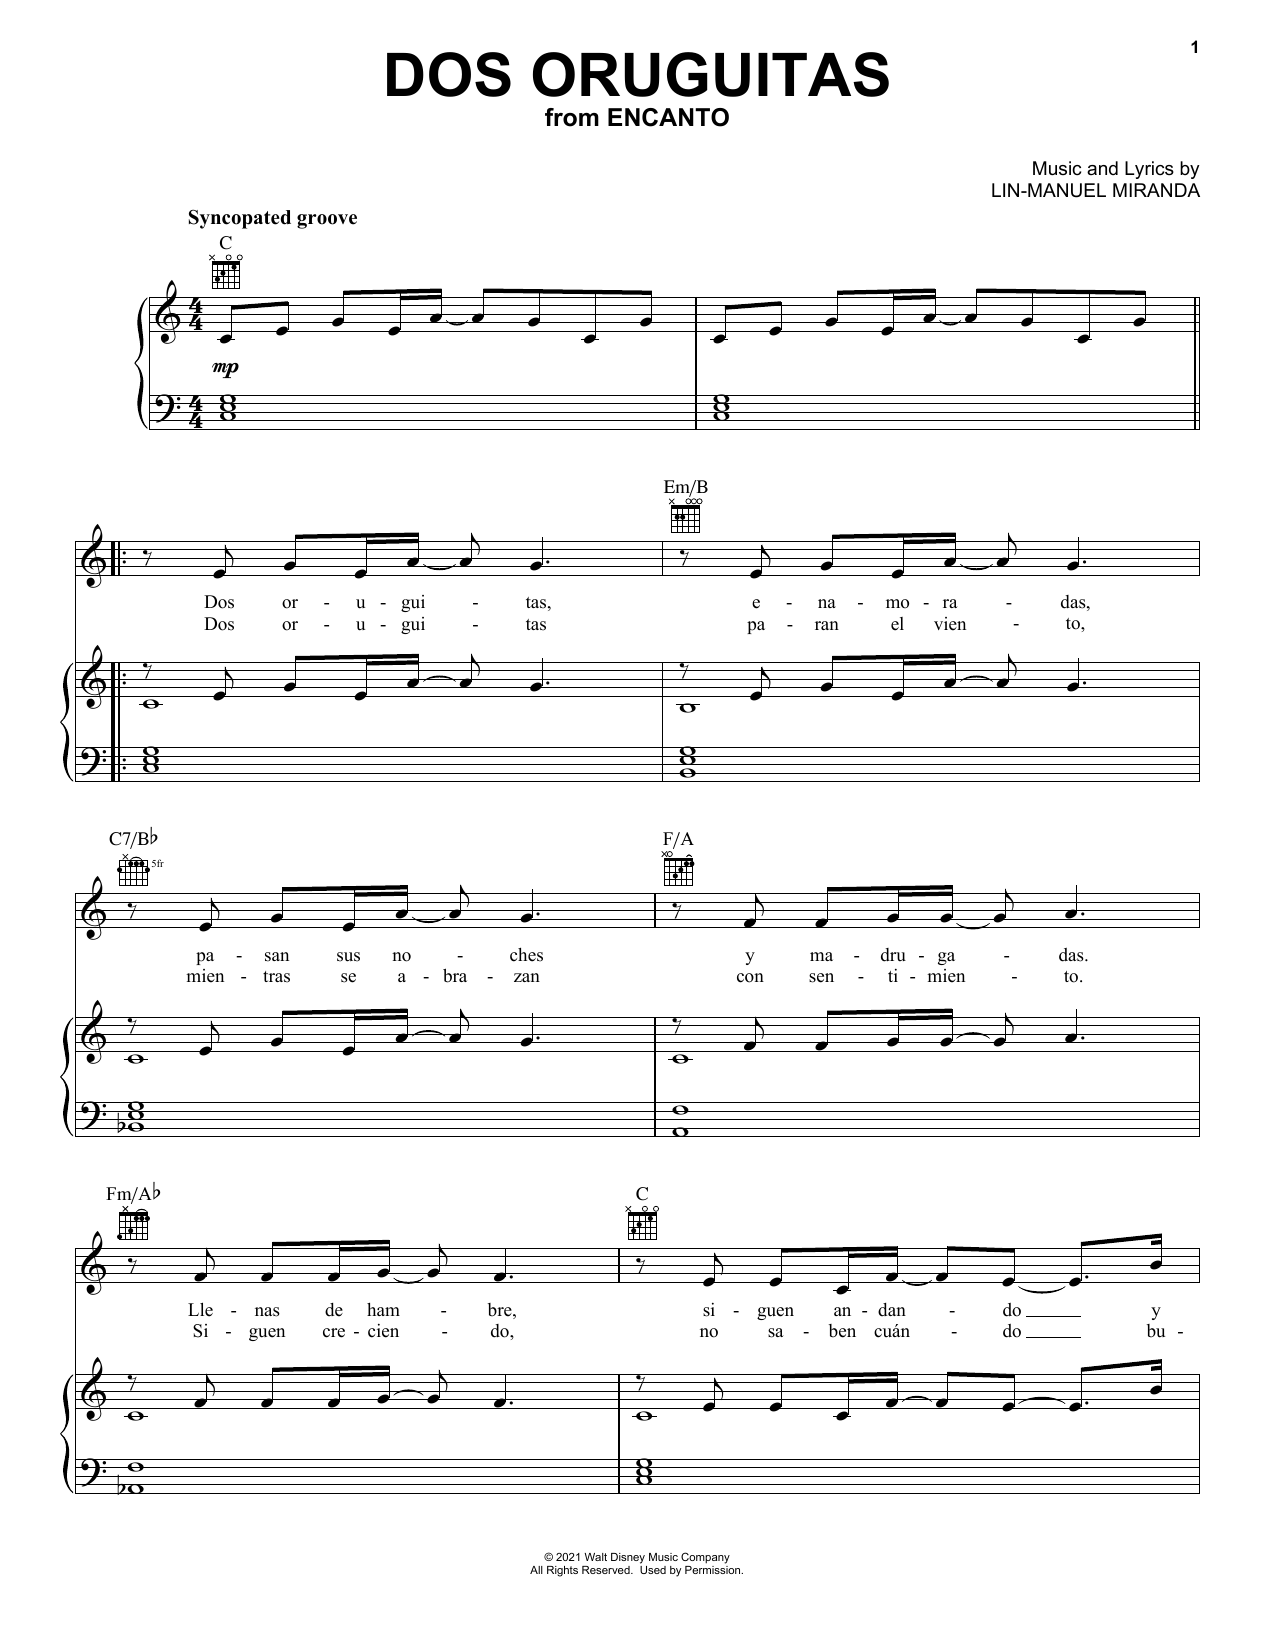 Lin-Manuel Miranda Dos Oruguitas (from Encanto) Sheet Music Notes & Chords for Piano, Vocal & Guitar Chords (Right-Hand Melody) - Download or Print PDF